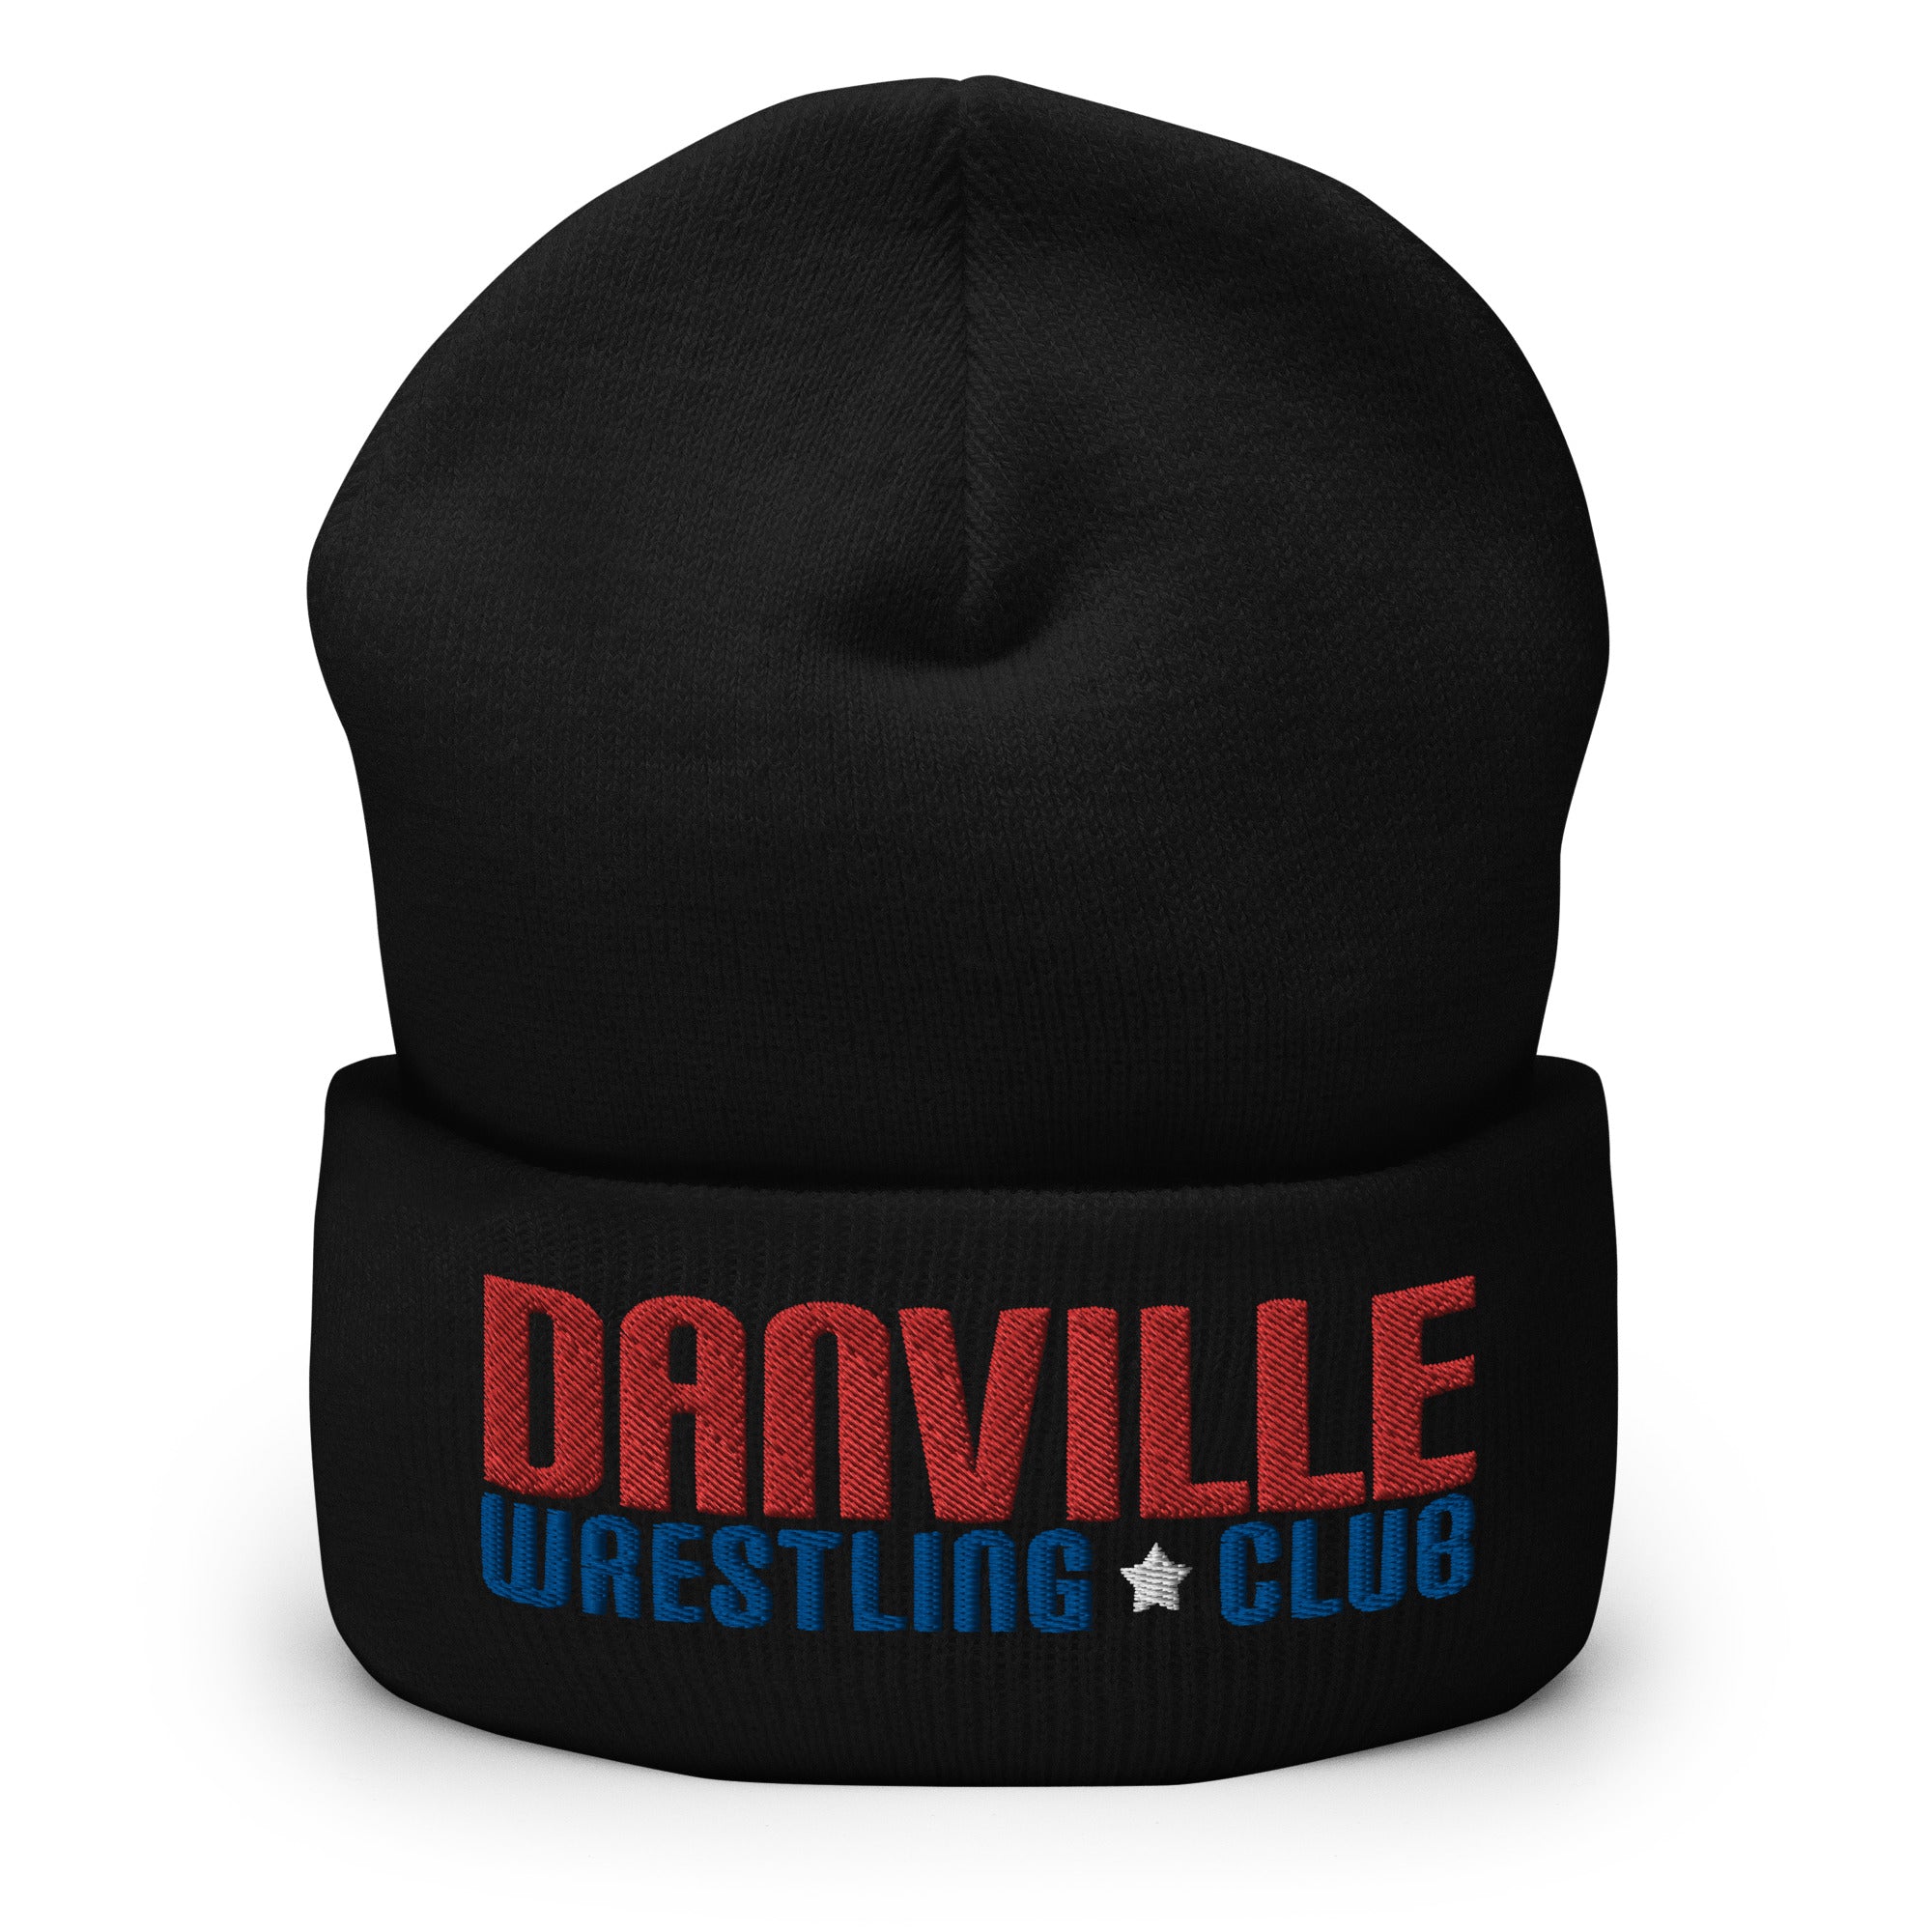 Danville Wrestling Club Cuffed Beanie